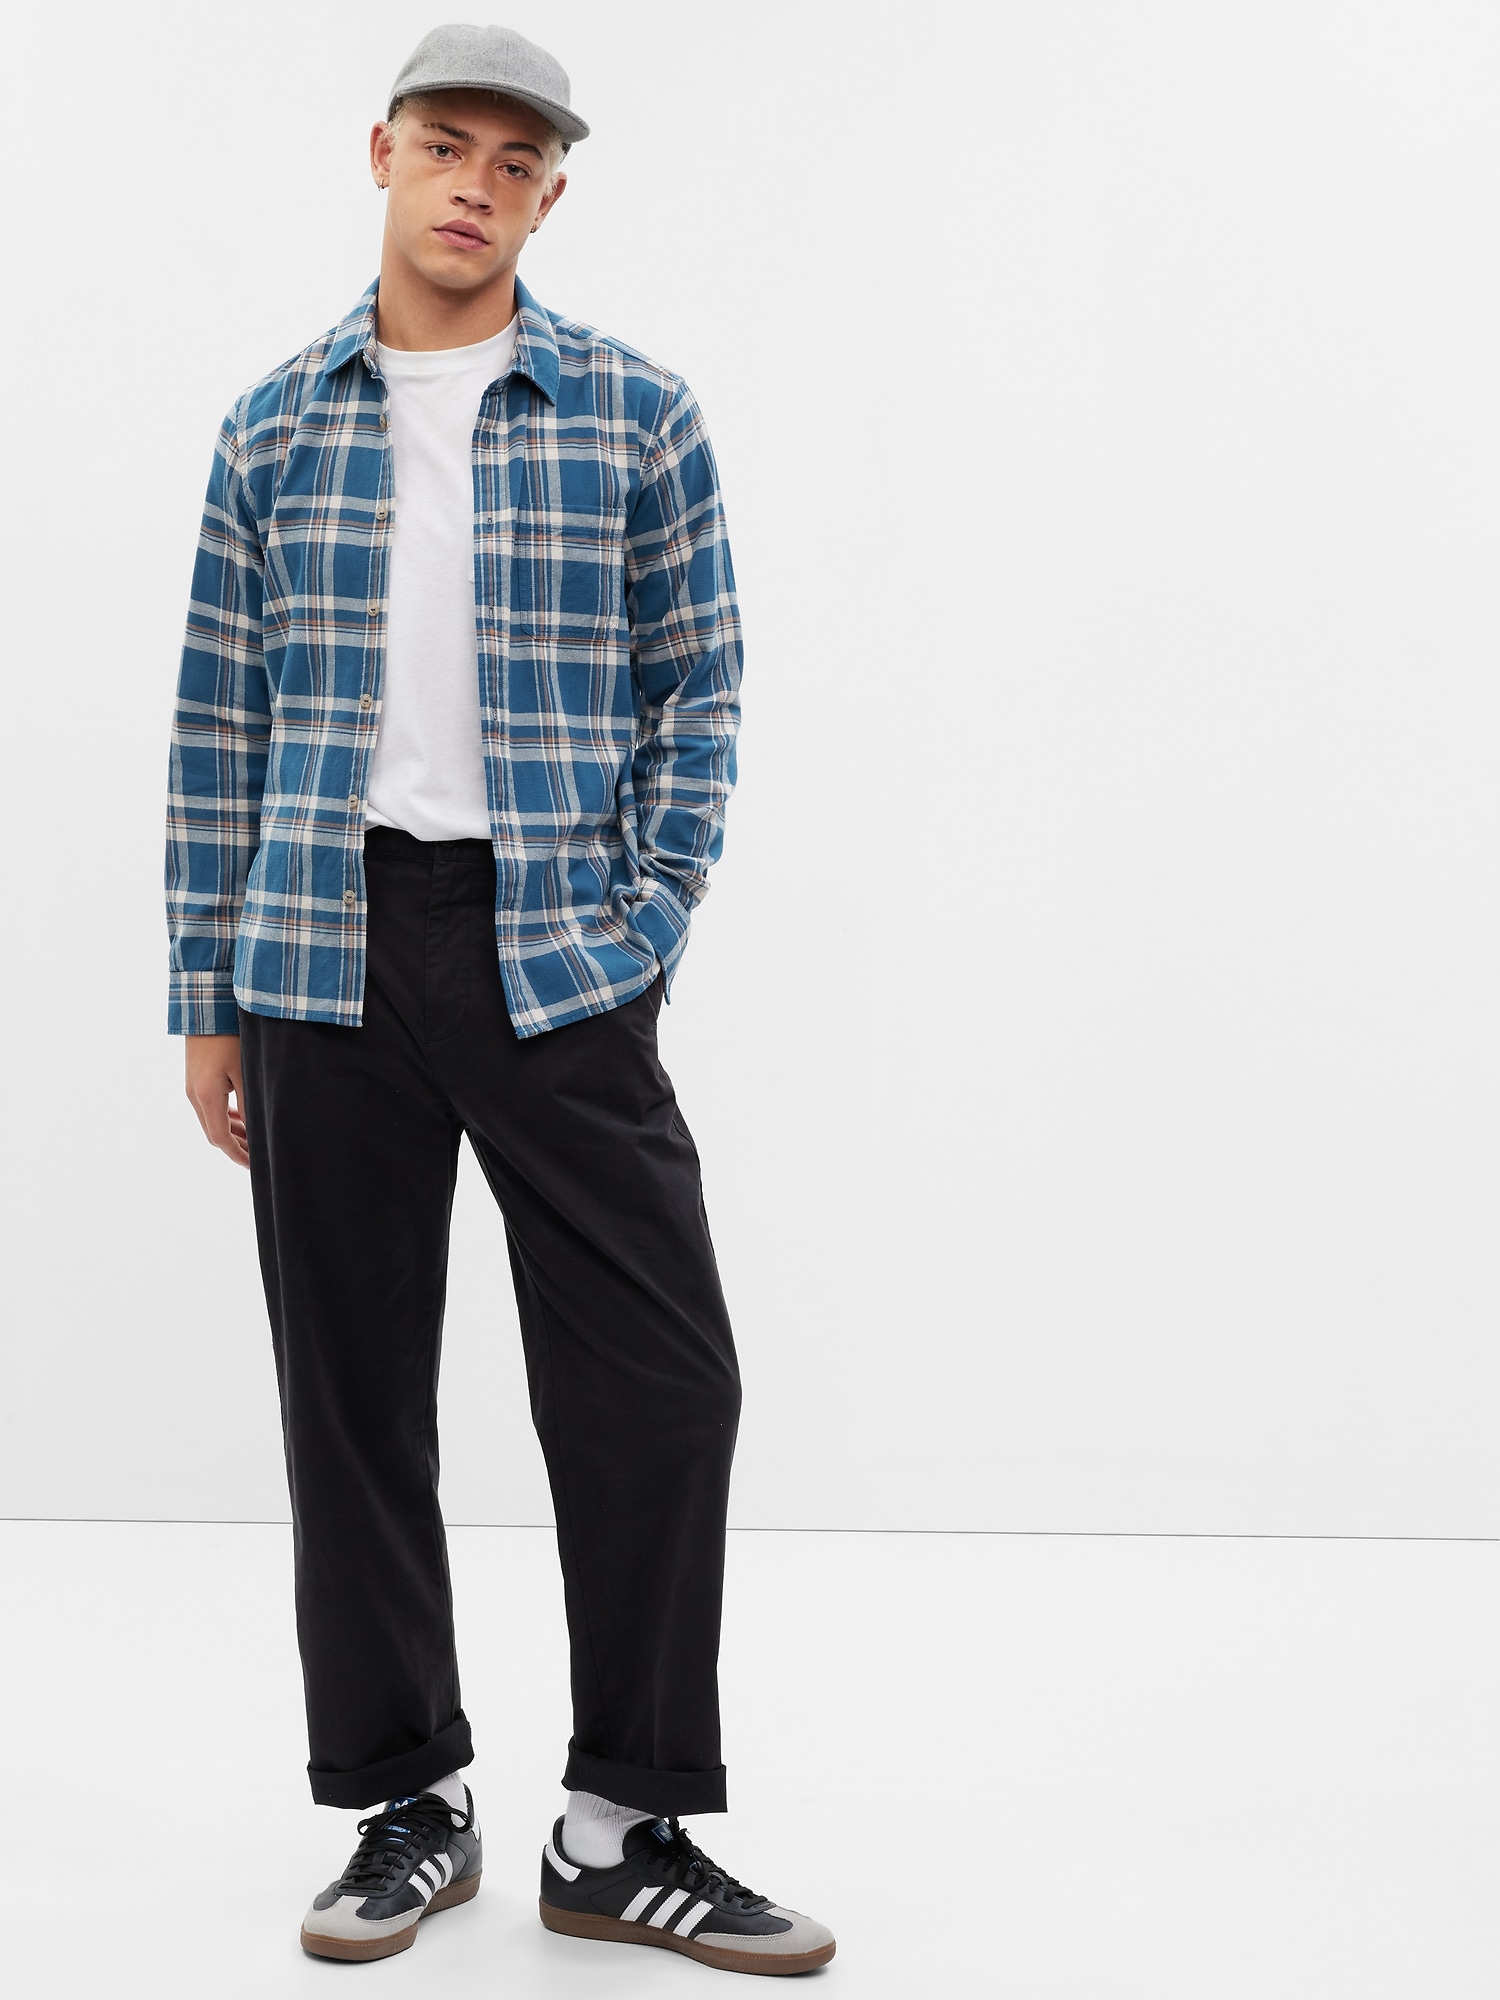 Flannel Shirt in Standard Fit | Gap Factory